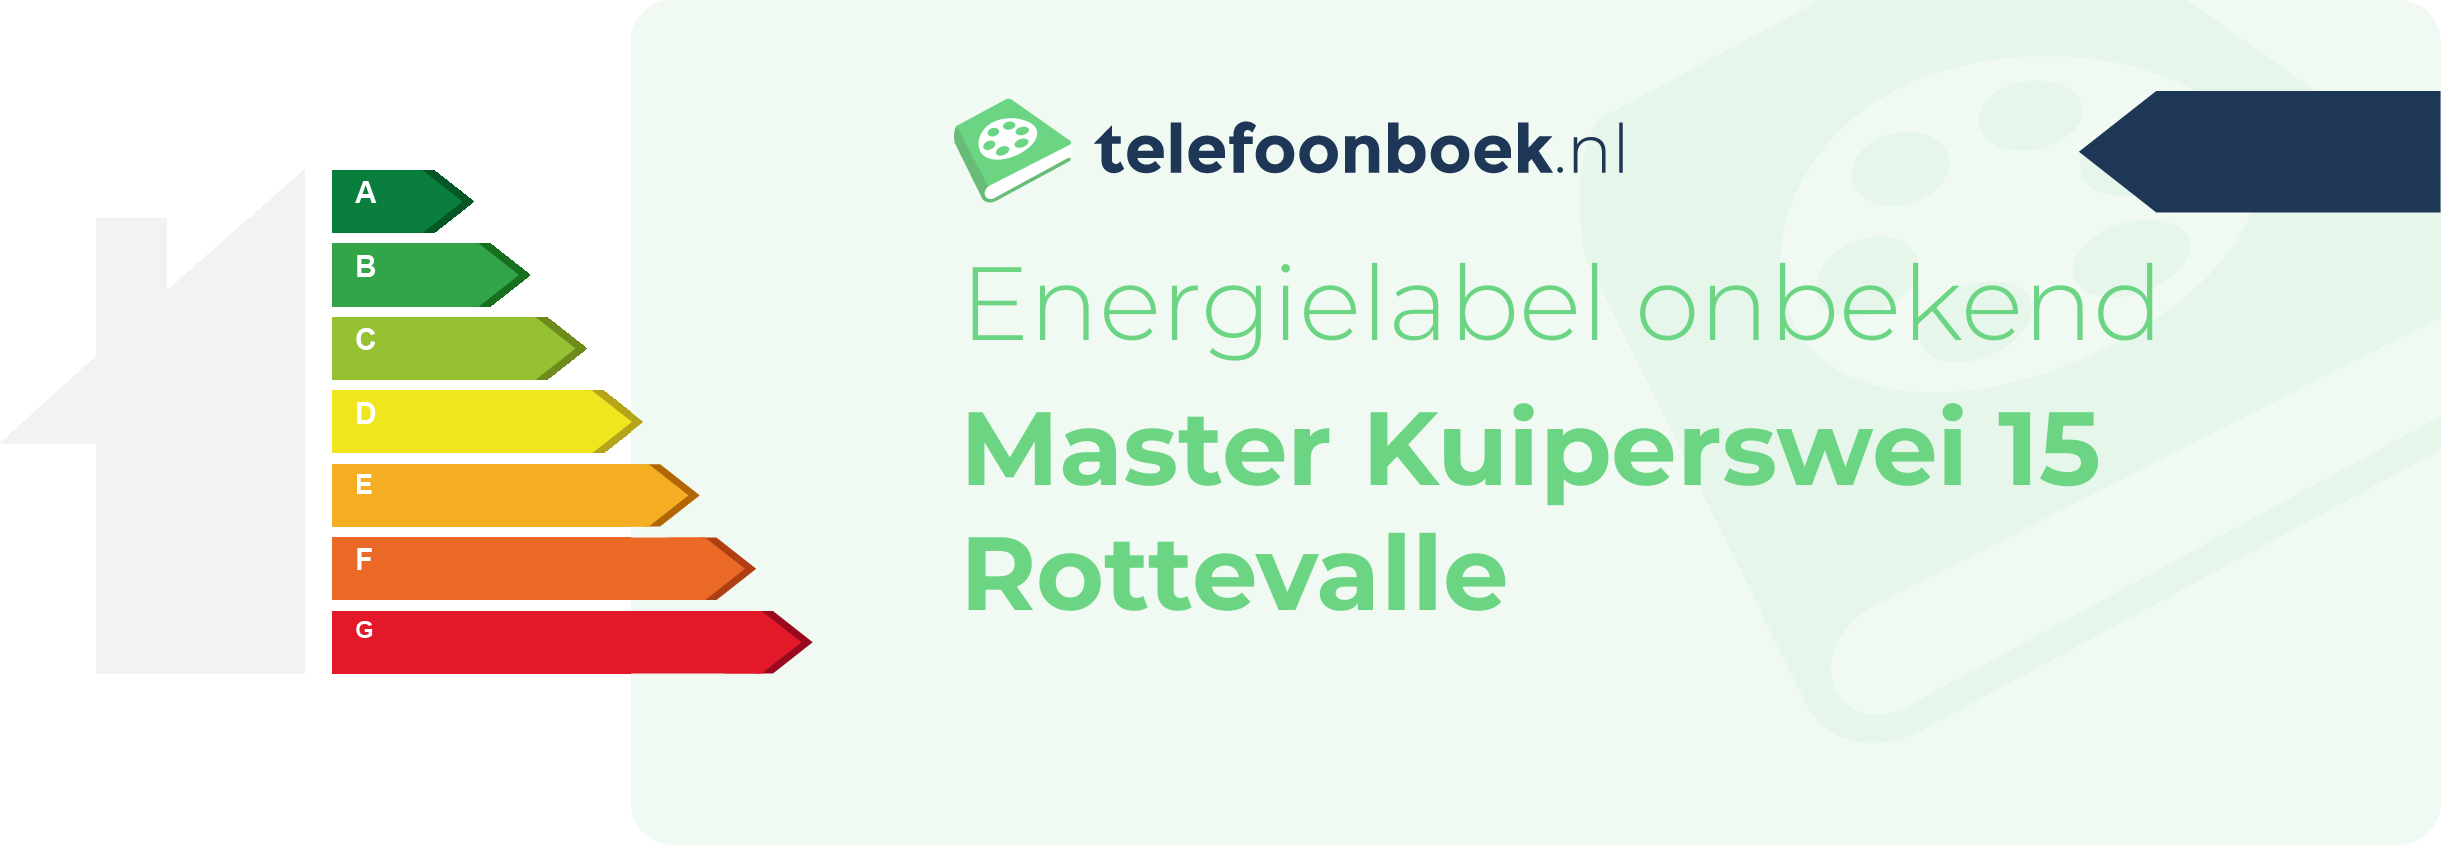 Energielabel Master Kuiperswei 15 Rottevalle